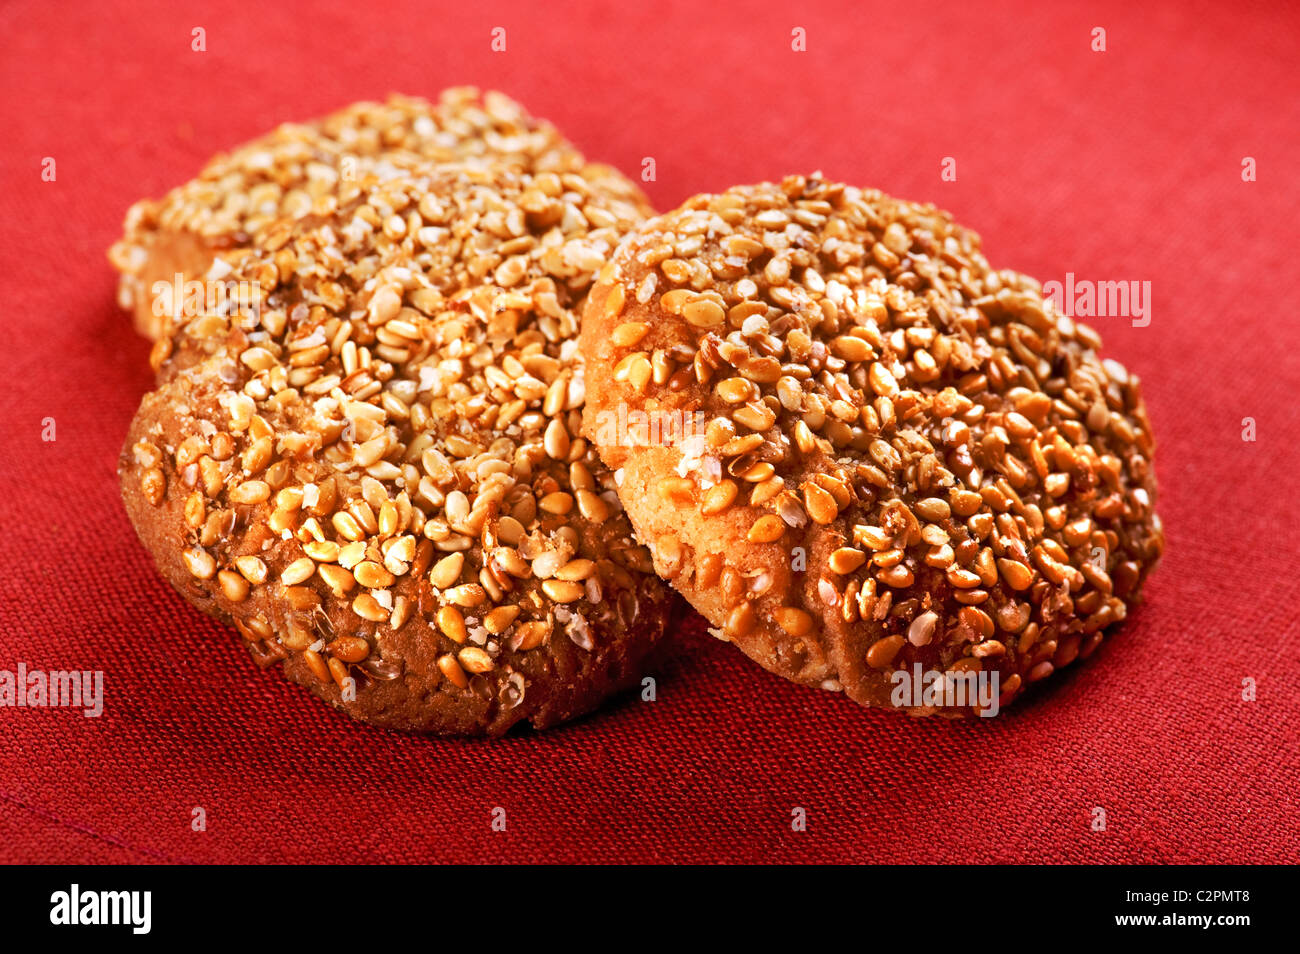 Objekt auf rot - Cookies mit Sesam Stockfoto